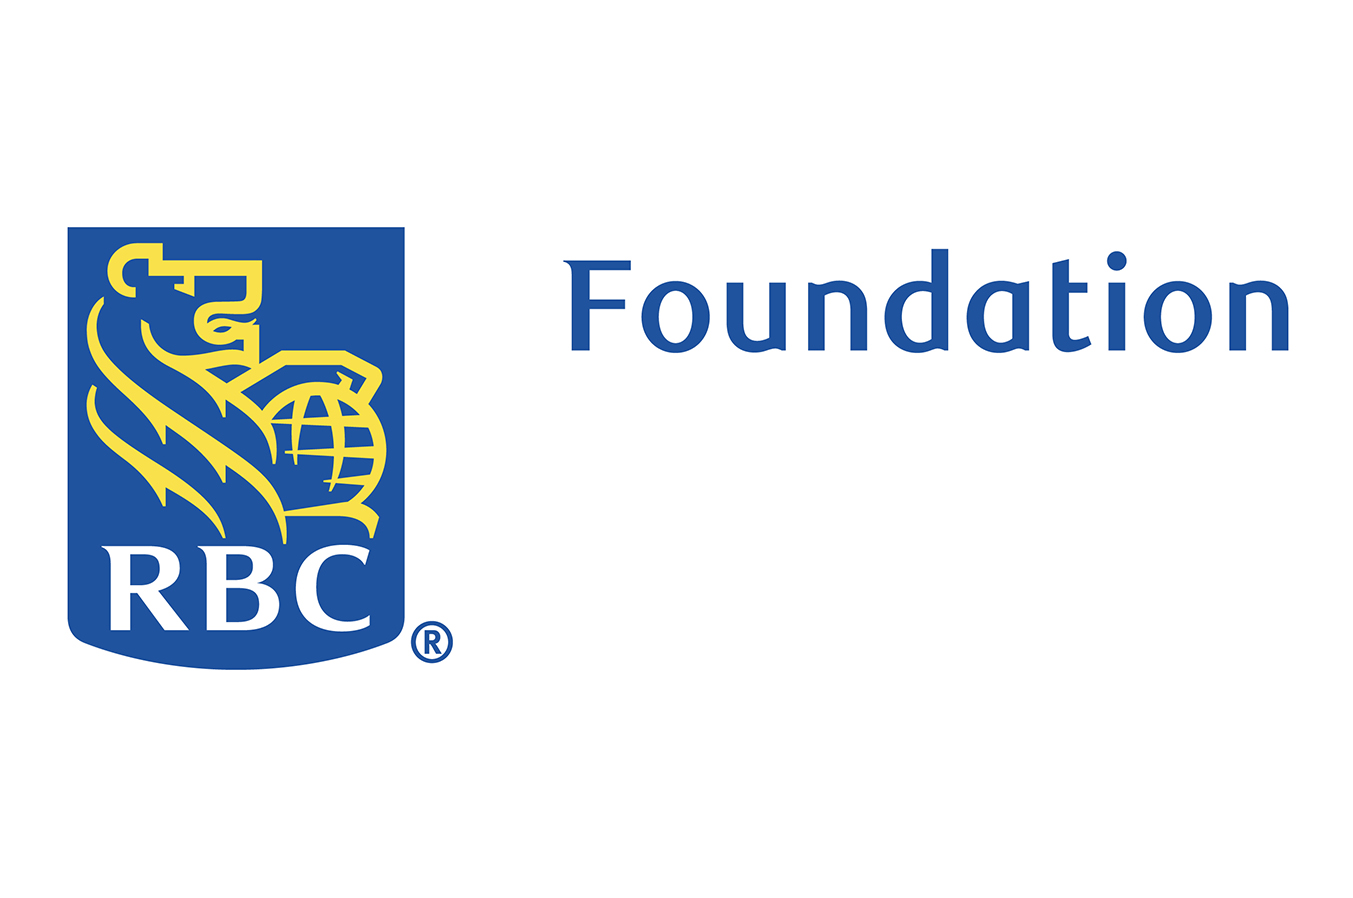 RBC Foundation helps improve Palliative Care